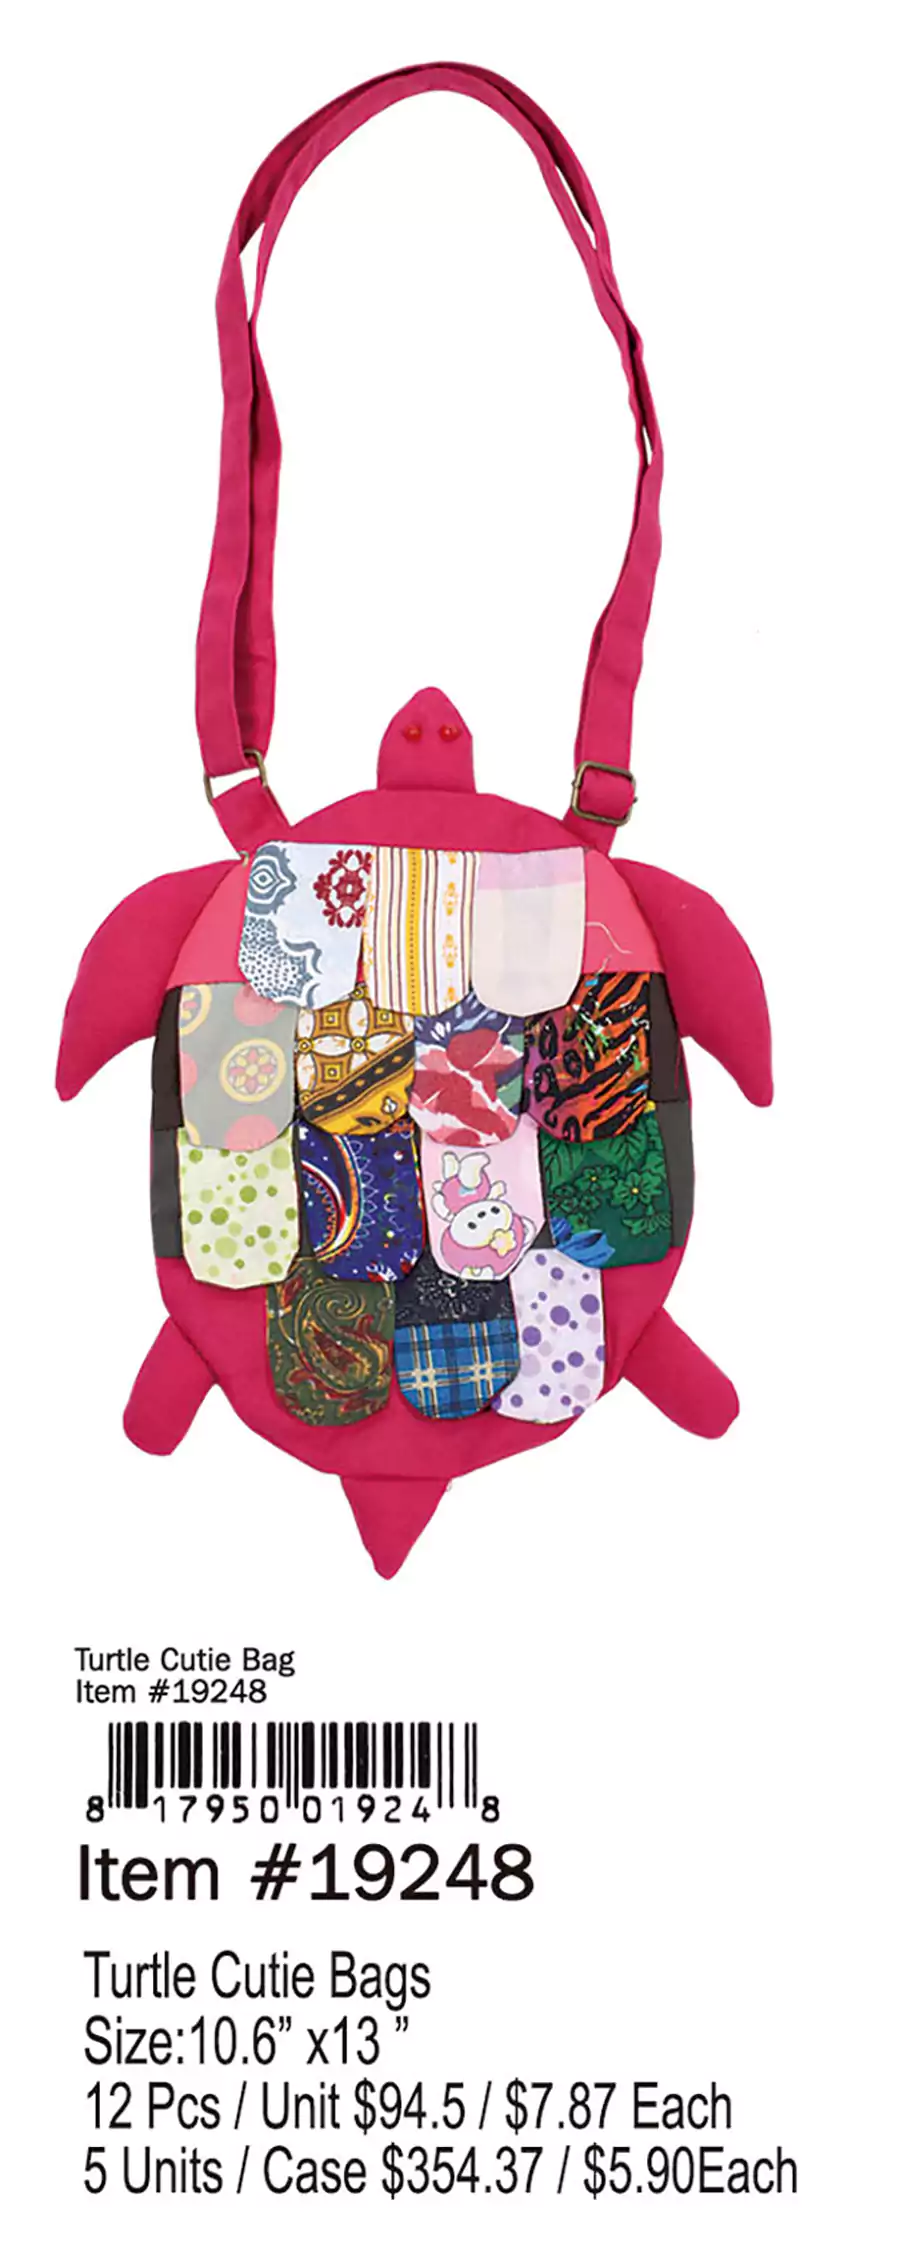 Turtle Cutie Bags